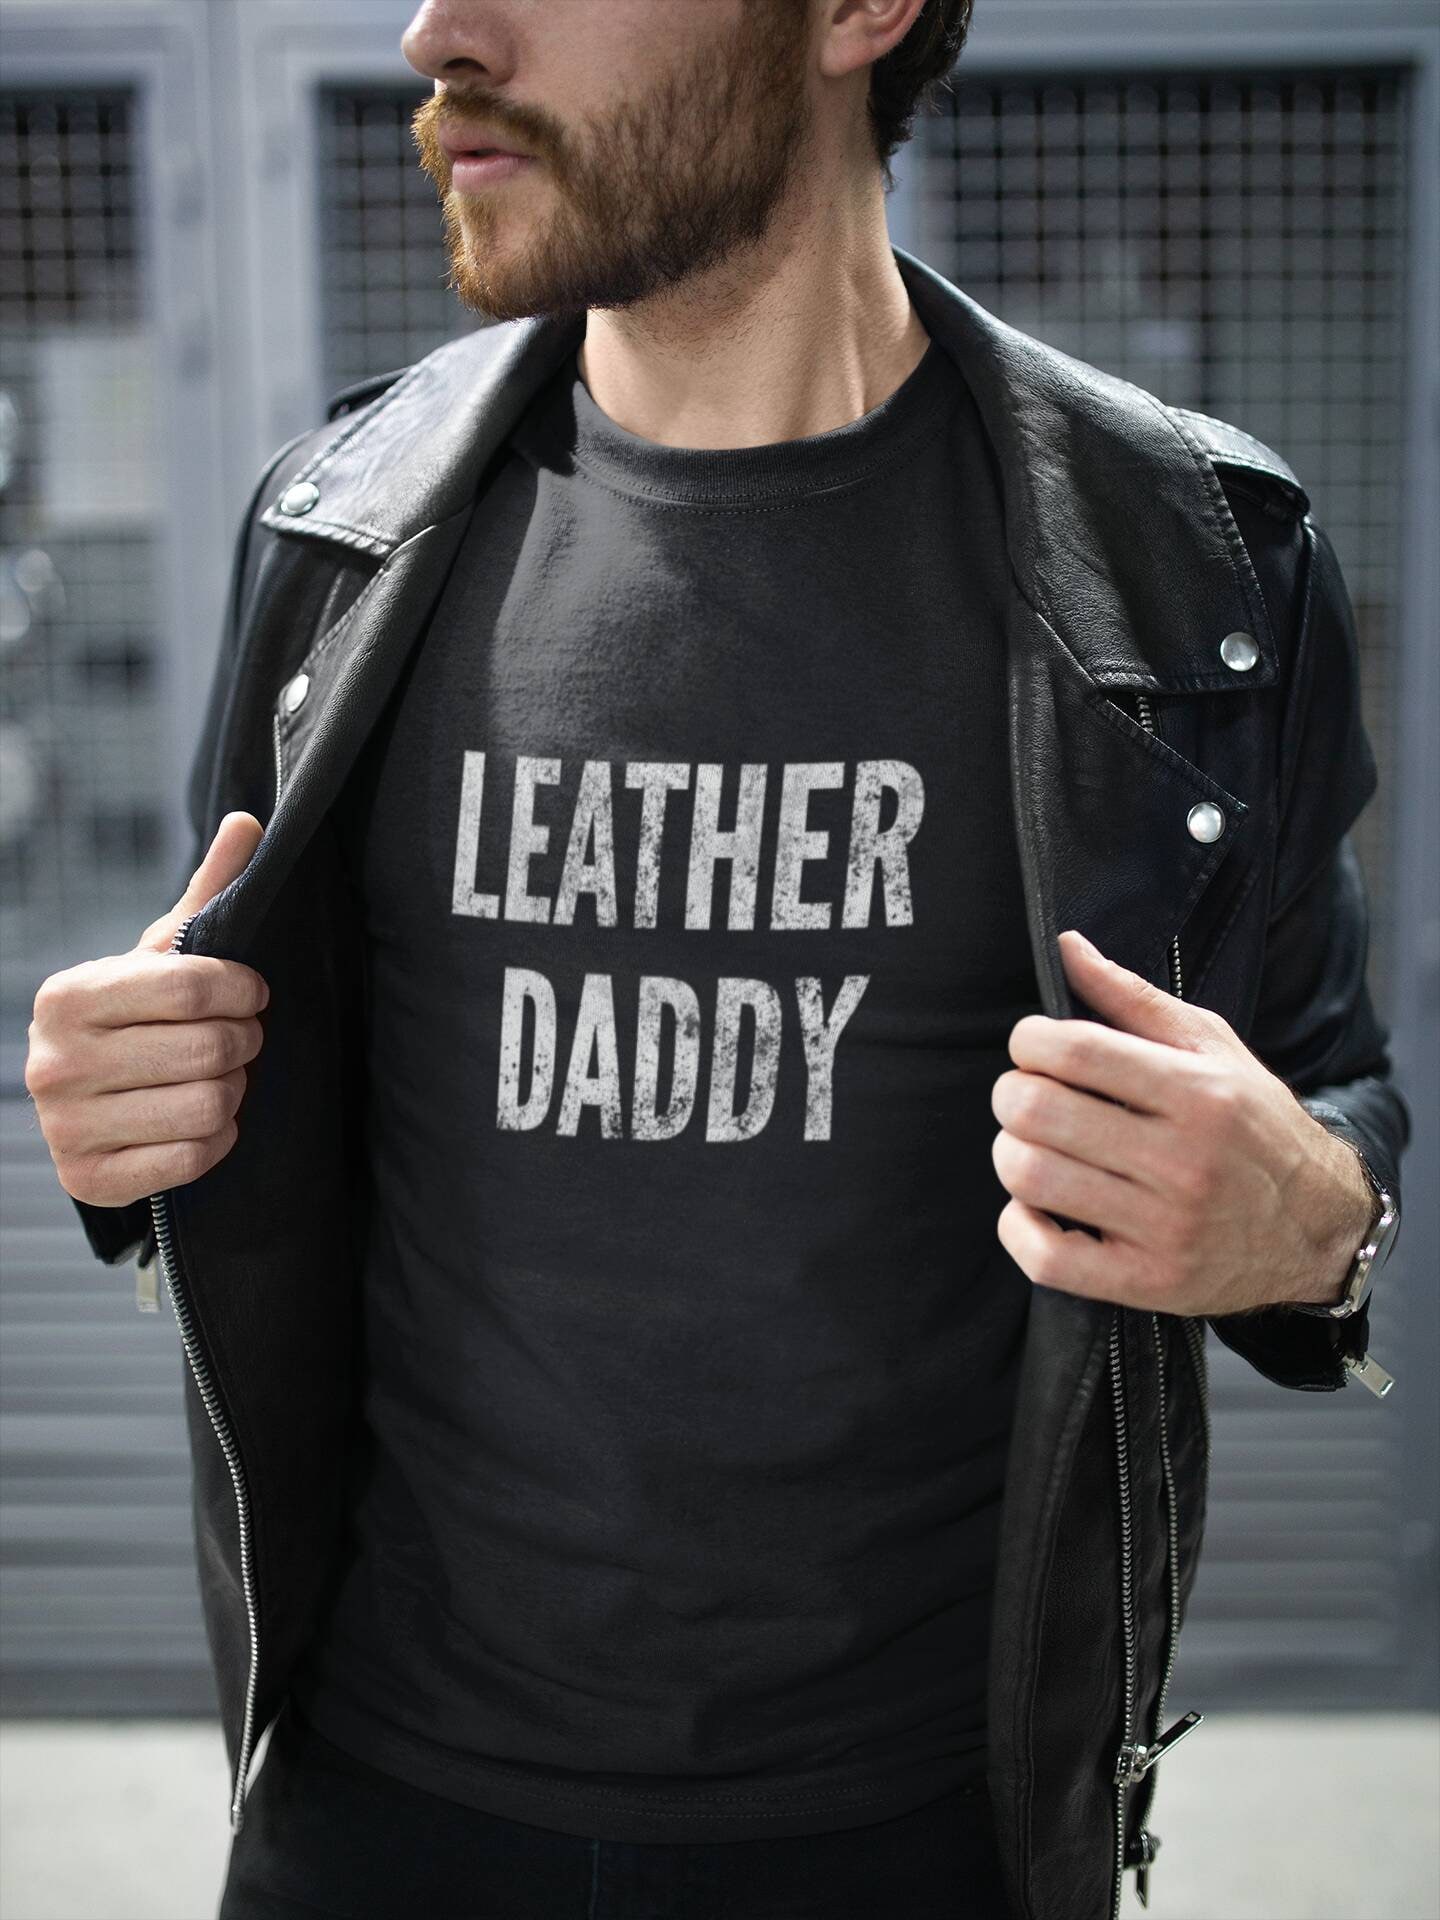 Leather Daddy Bdsm Shirt Bdsm Gift Leather Kink Gay Shirt - Etsy